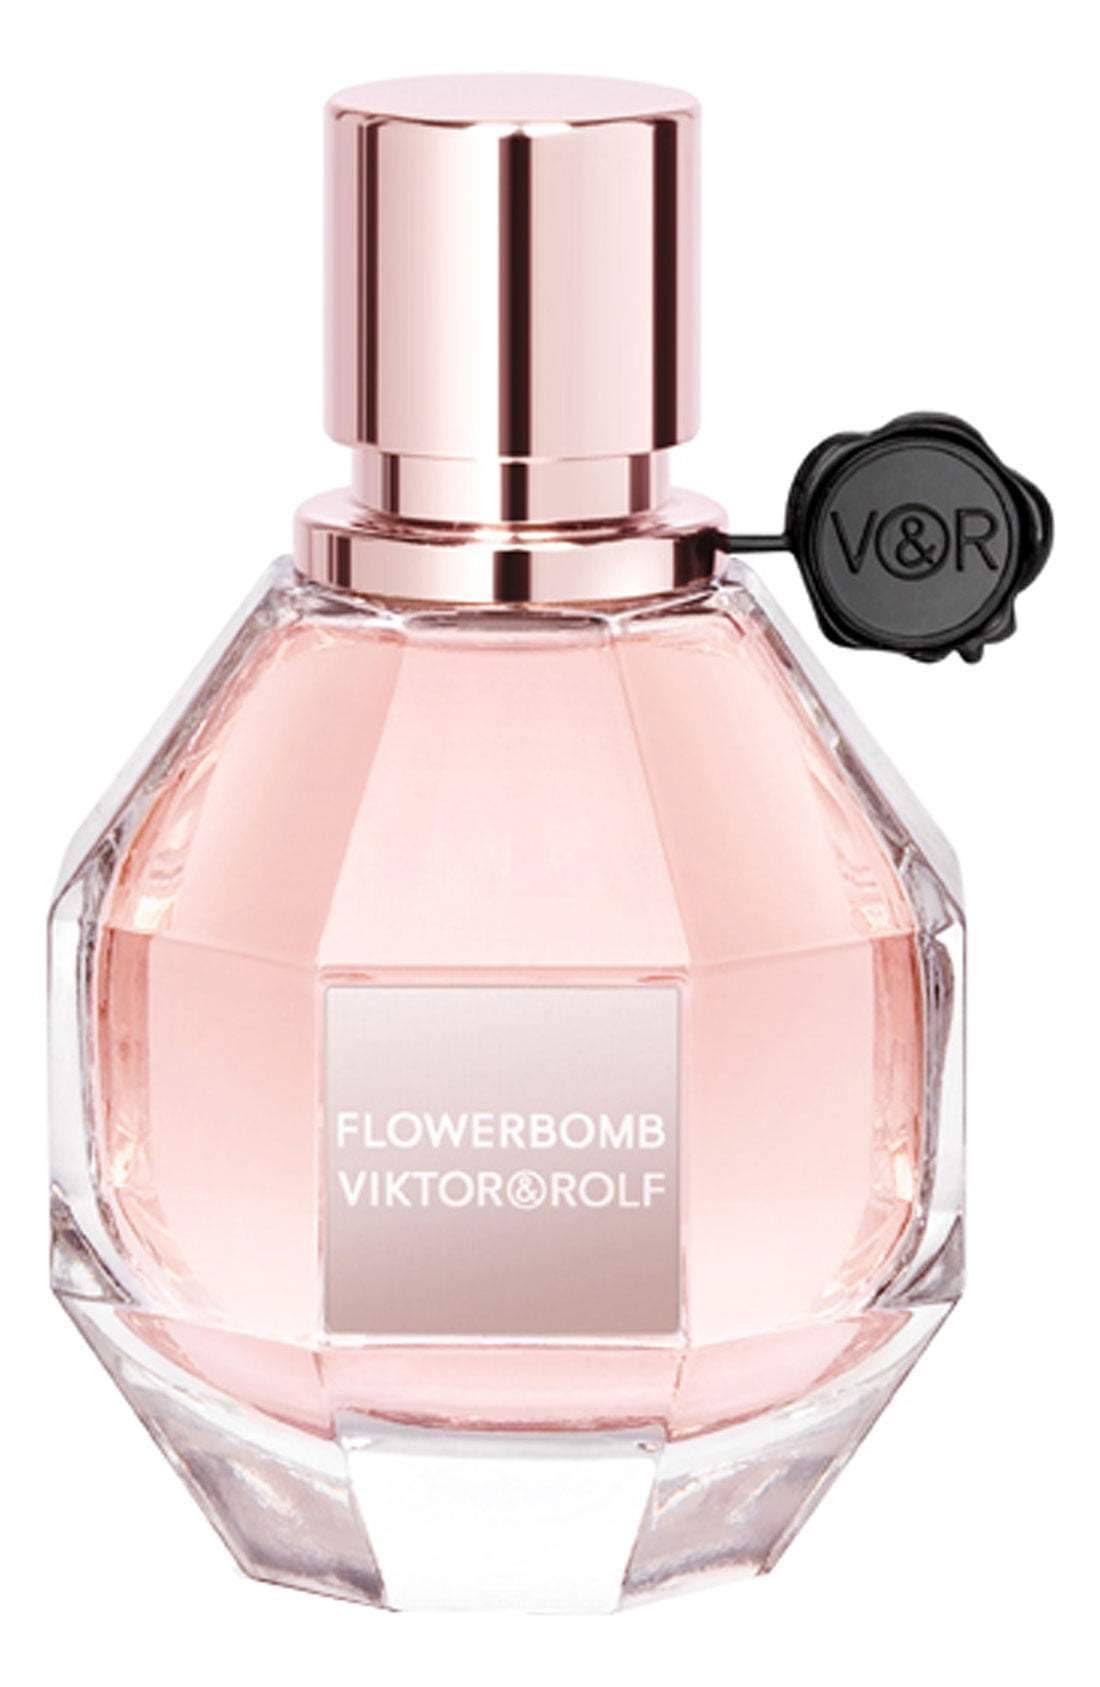 Viktor & Rolf Flowerbomb for Women Eau de Parfum Spray - 30ml